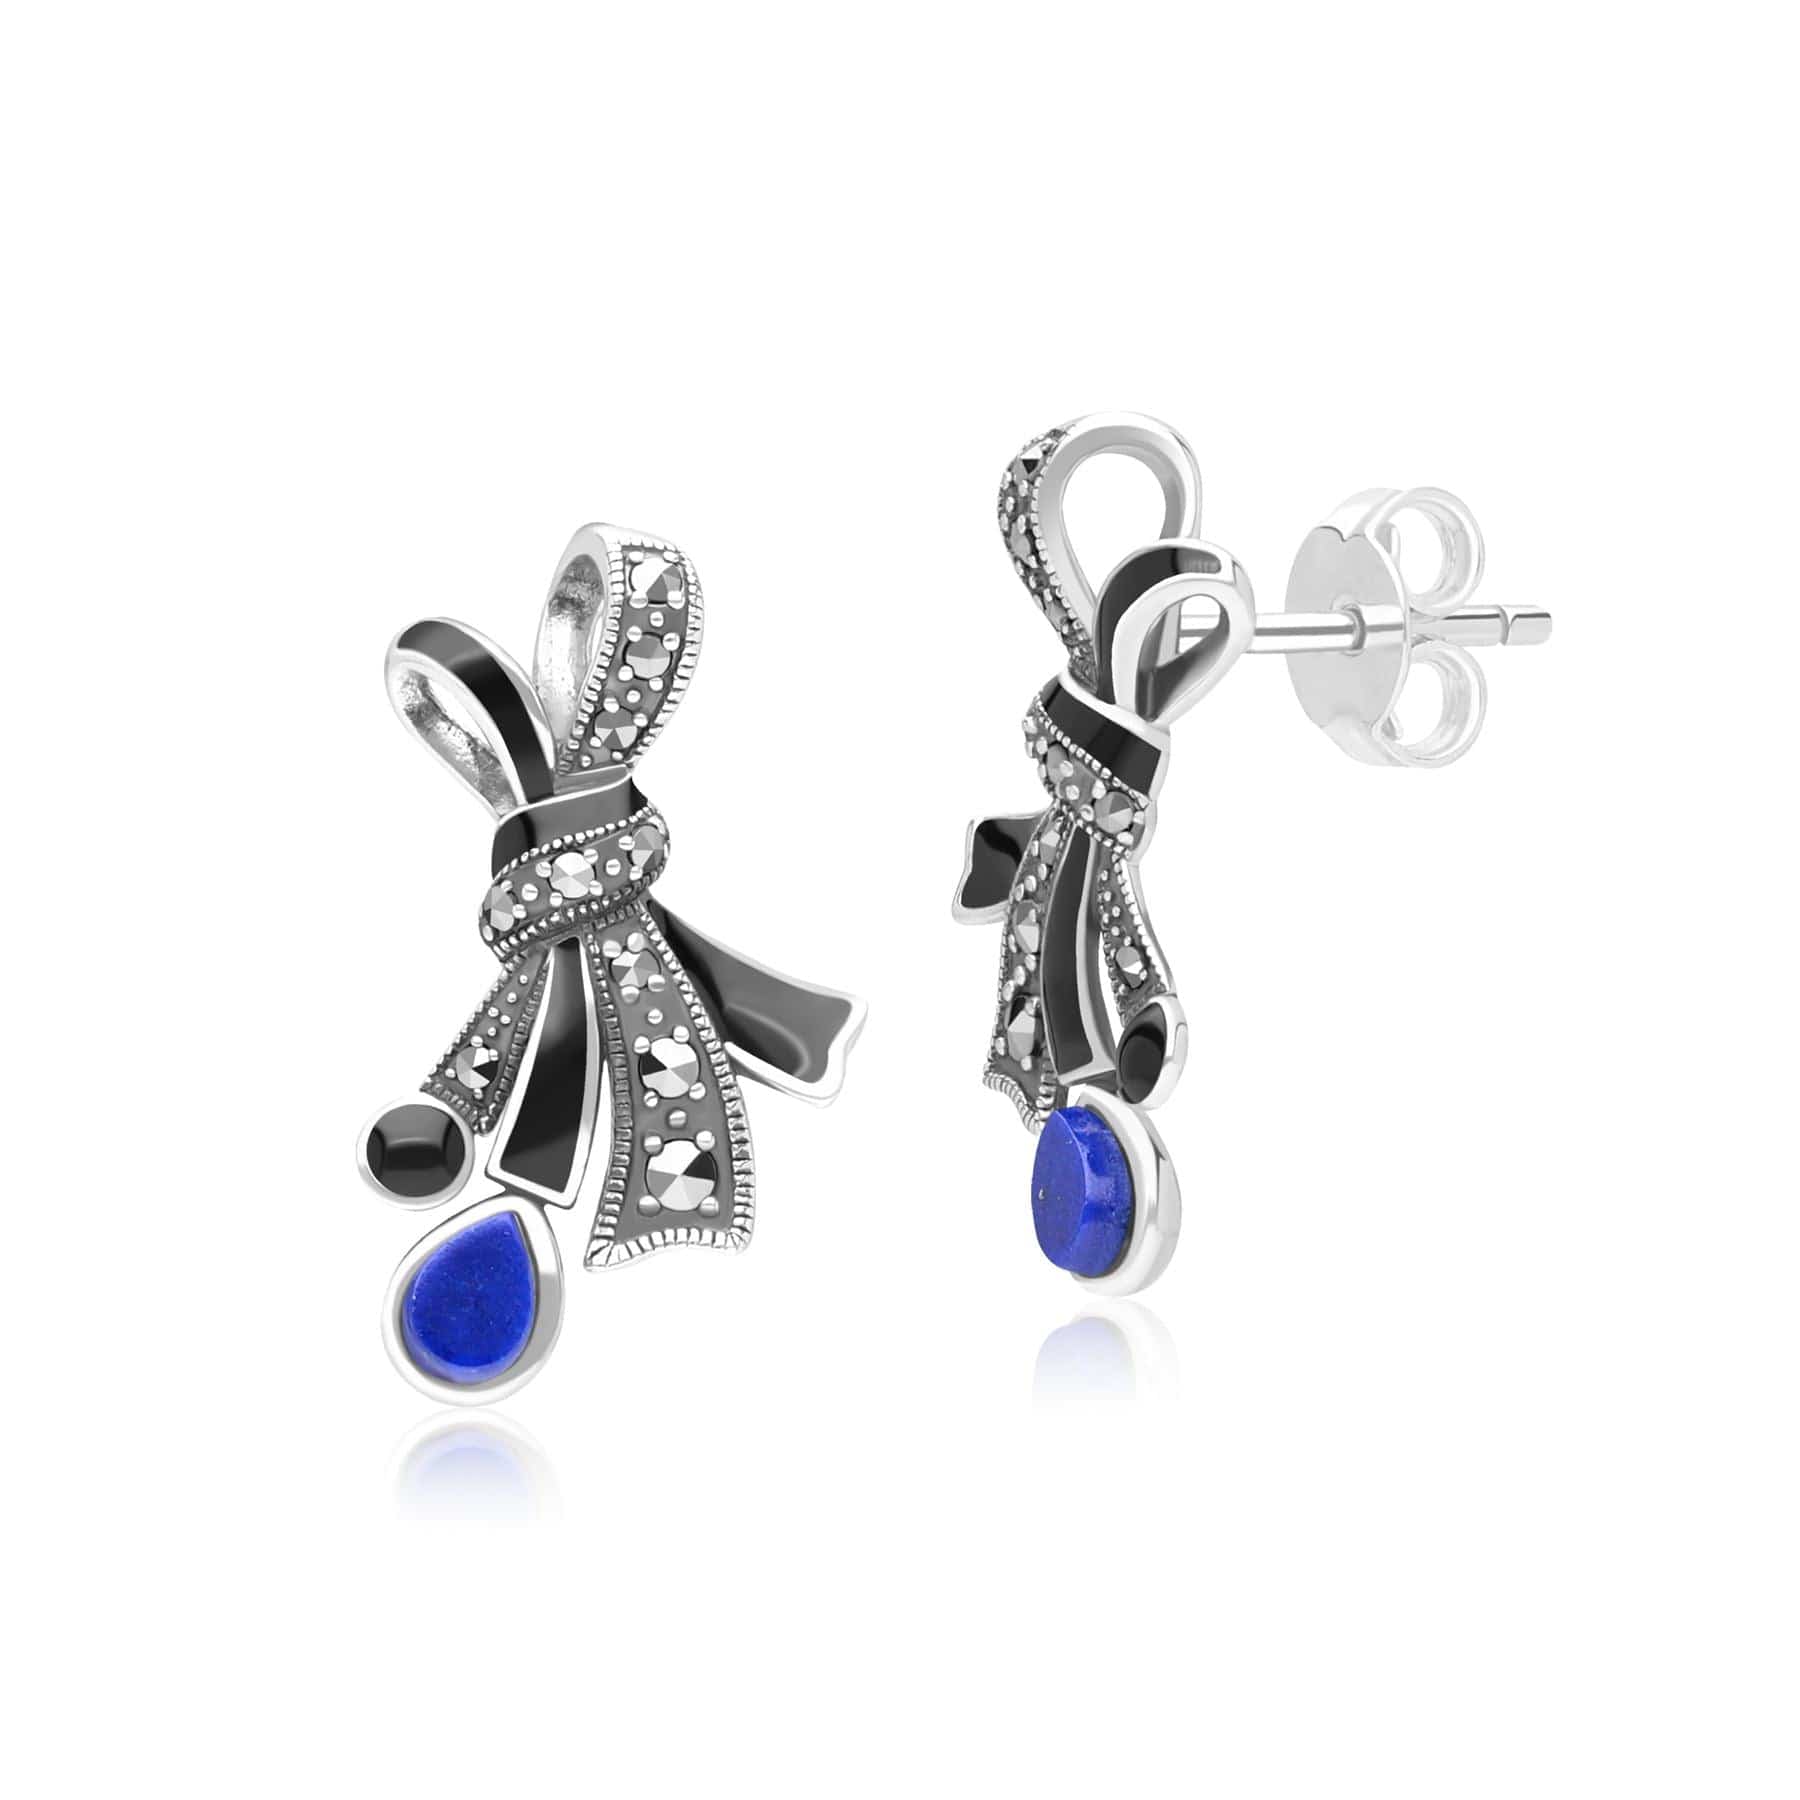 Art Nouveau Style Marcasite, Lapis Lazuli and Black Enamel Ribbon Bow Stud Earrings in Sterling Silver 214E935802925 